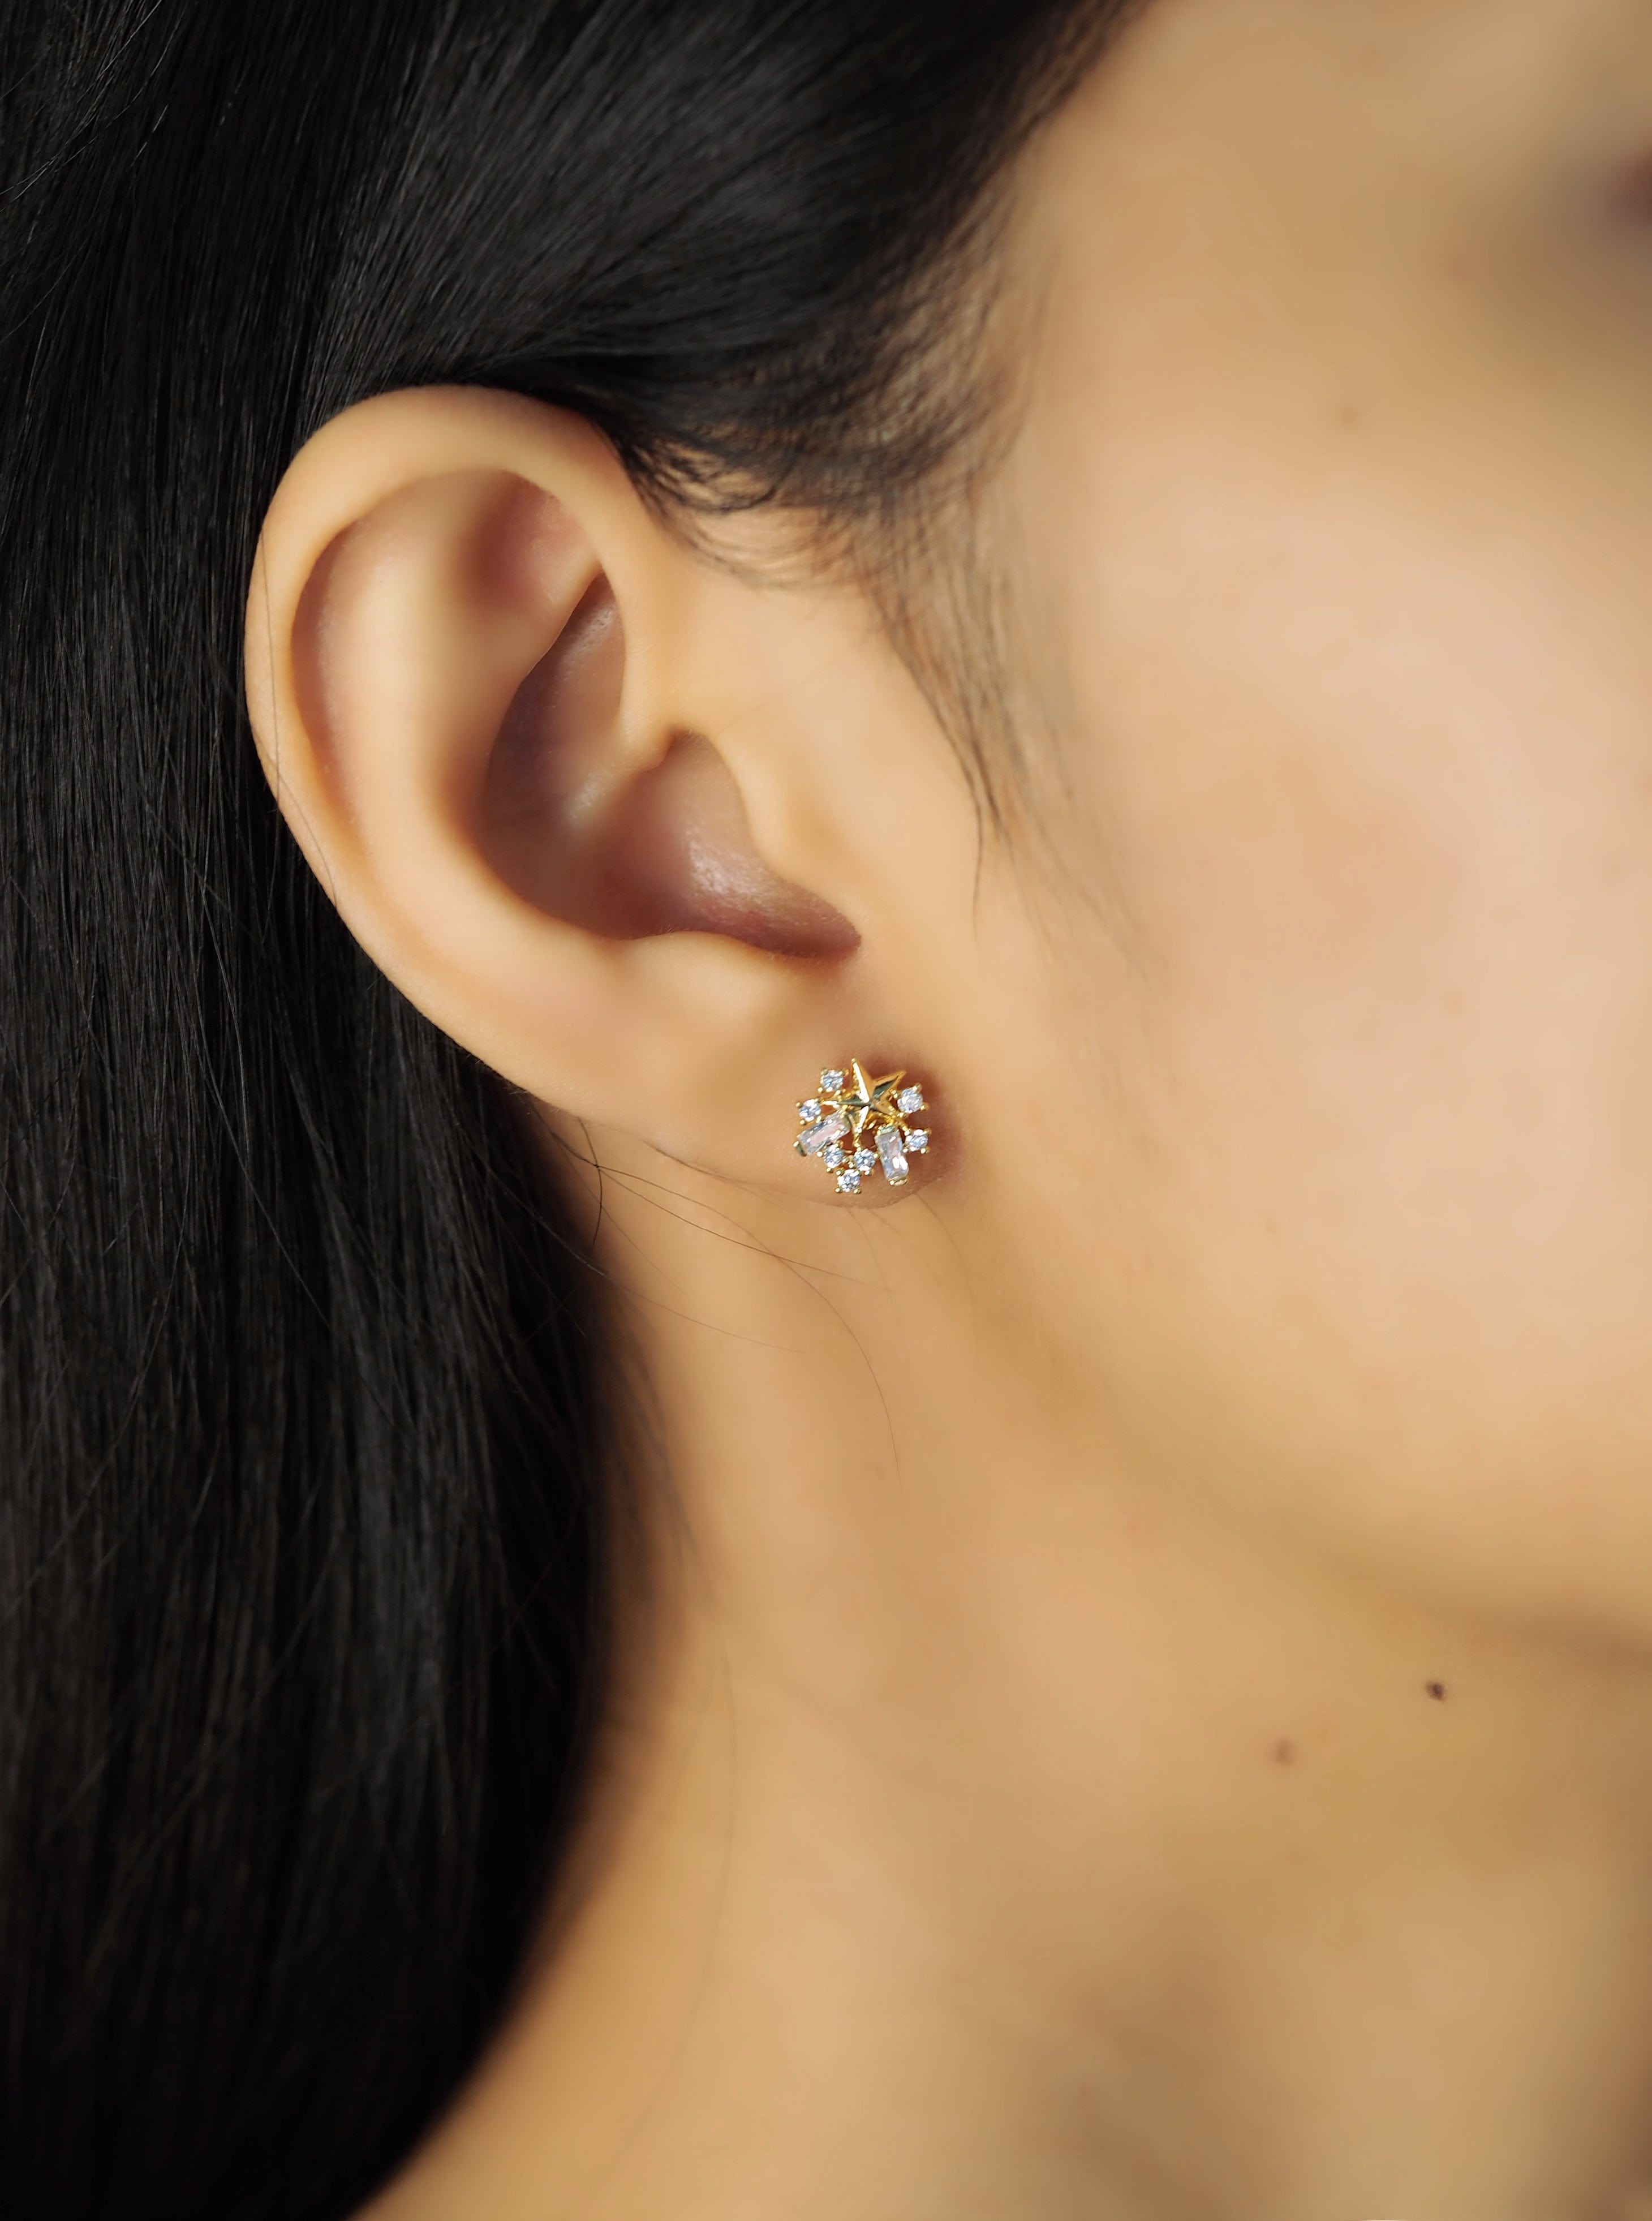 TAI JEWELRY Earrings Golden Star Baguette CZ Clusters